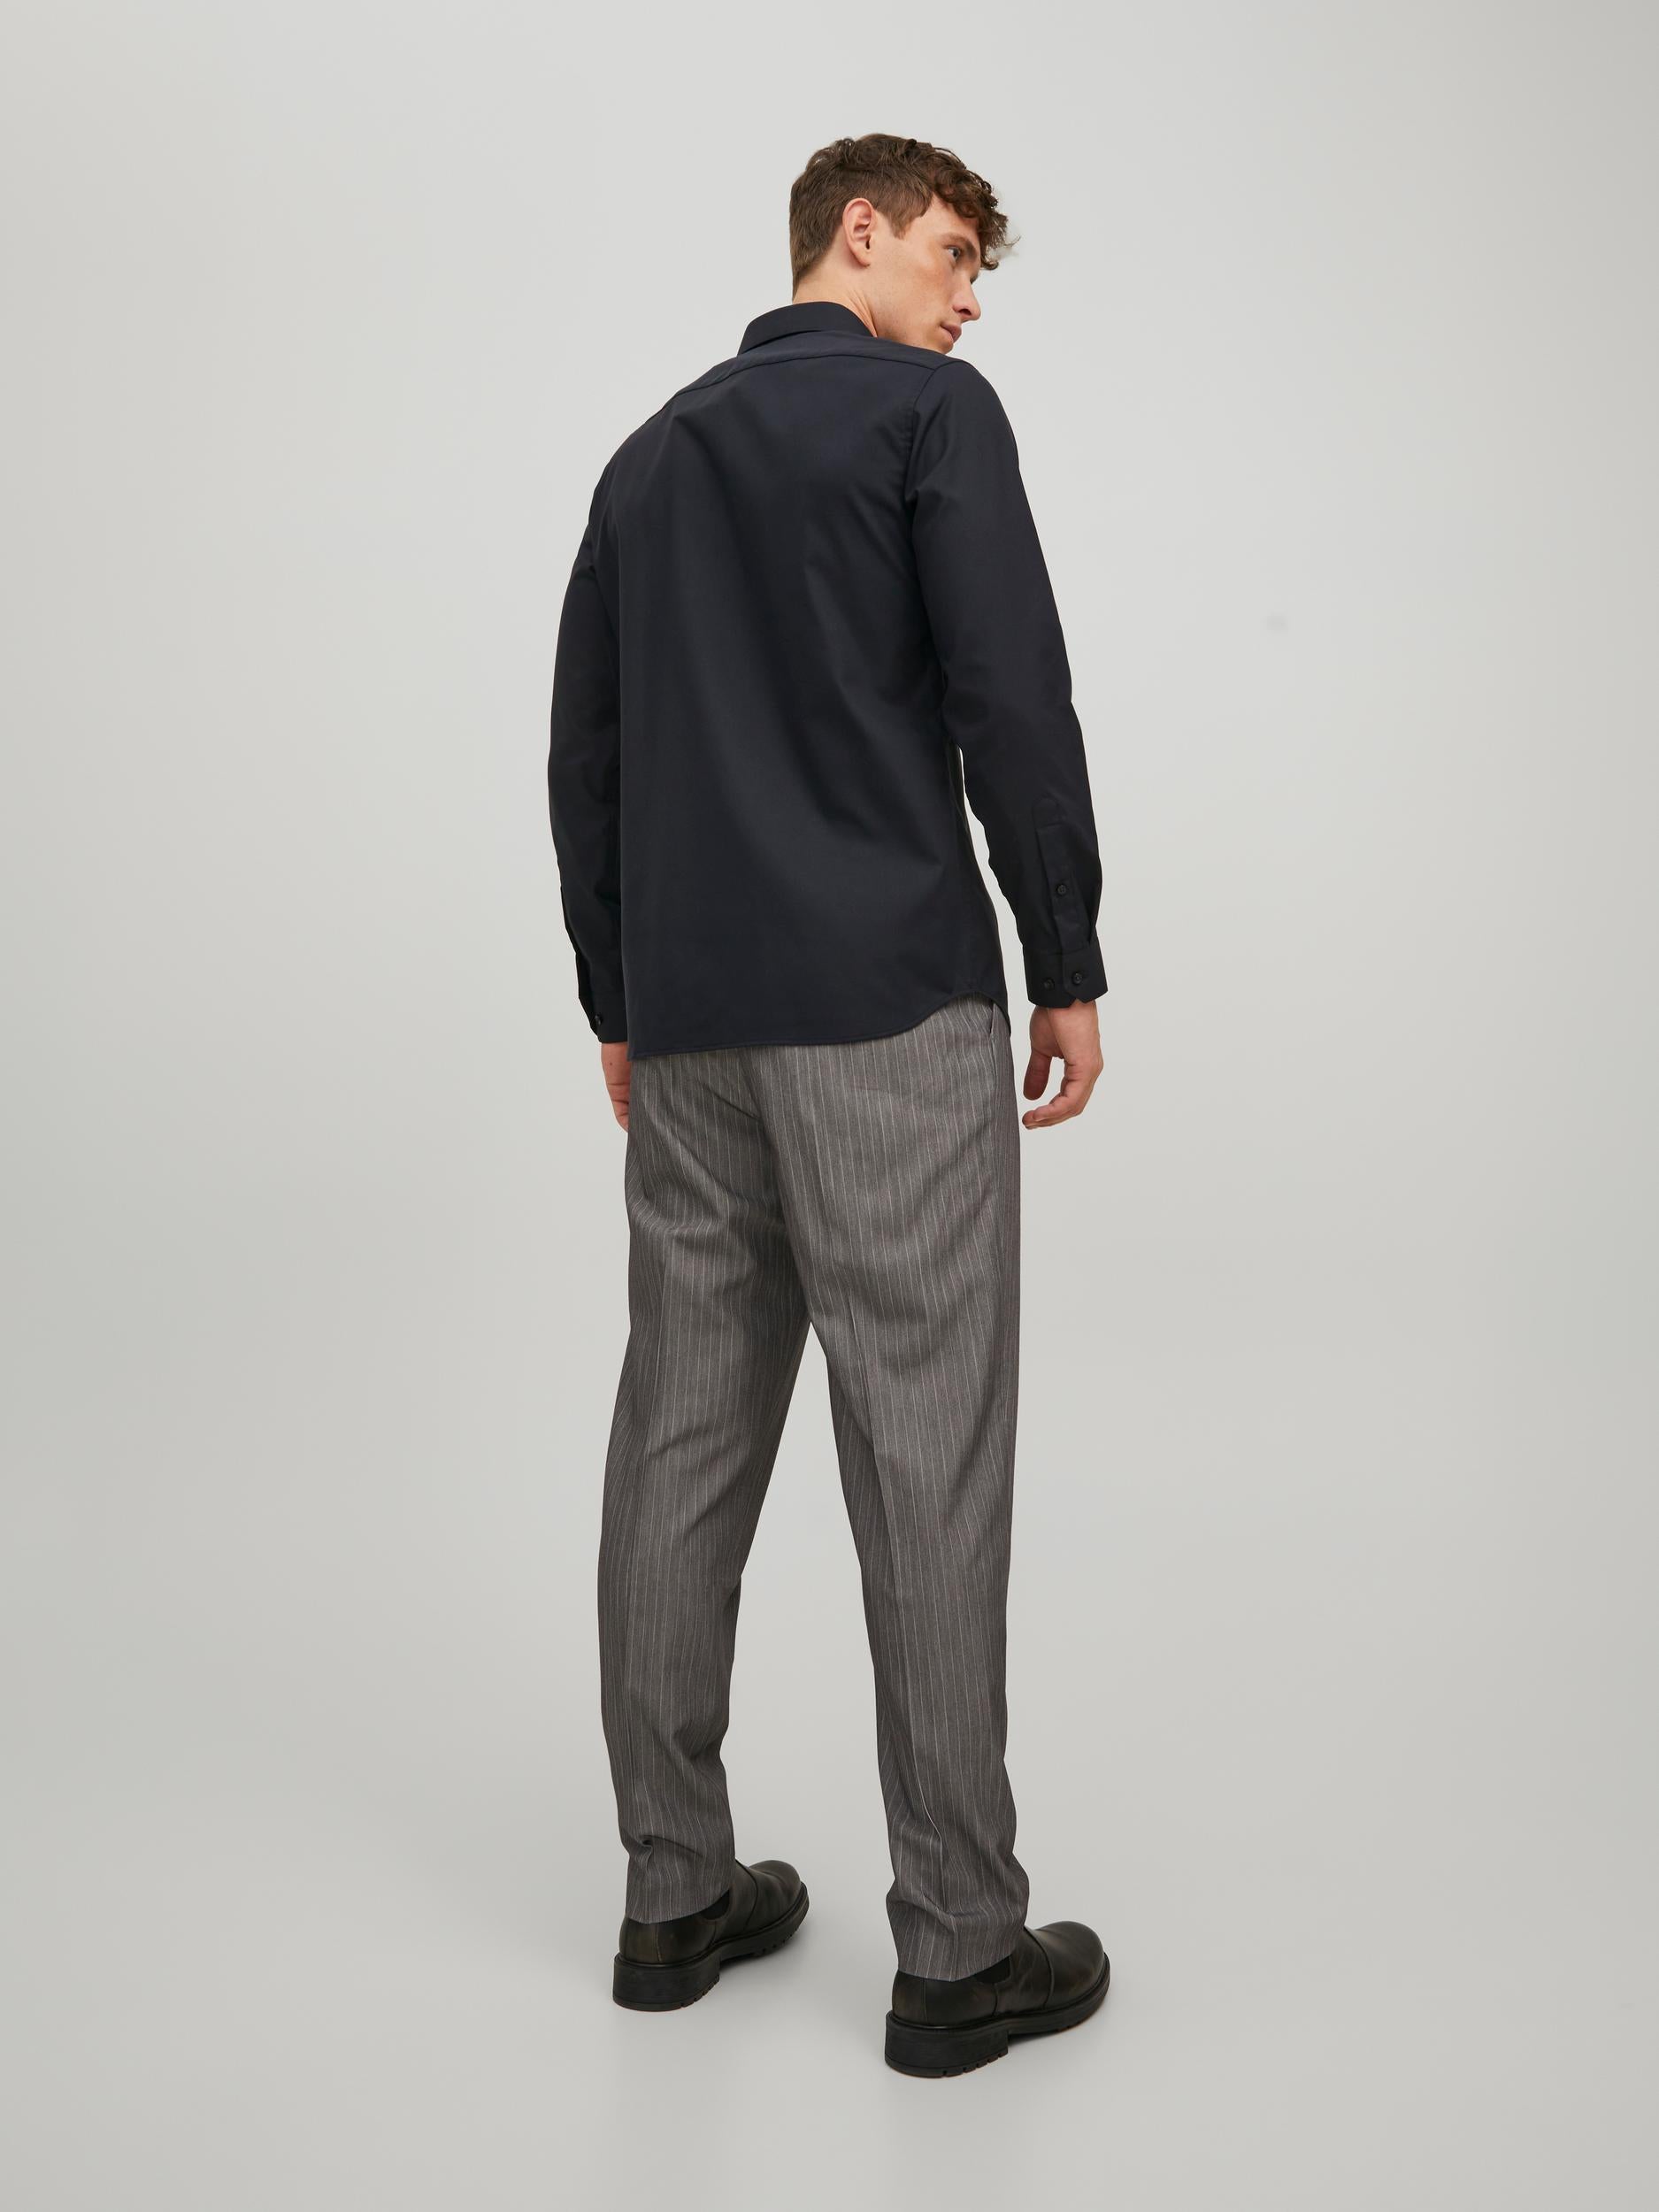 Men's Parker Black Shirt-Model Back View